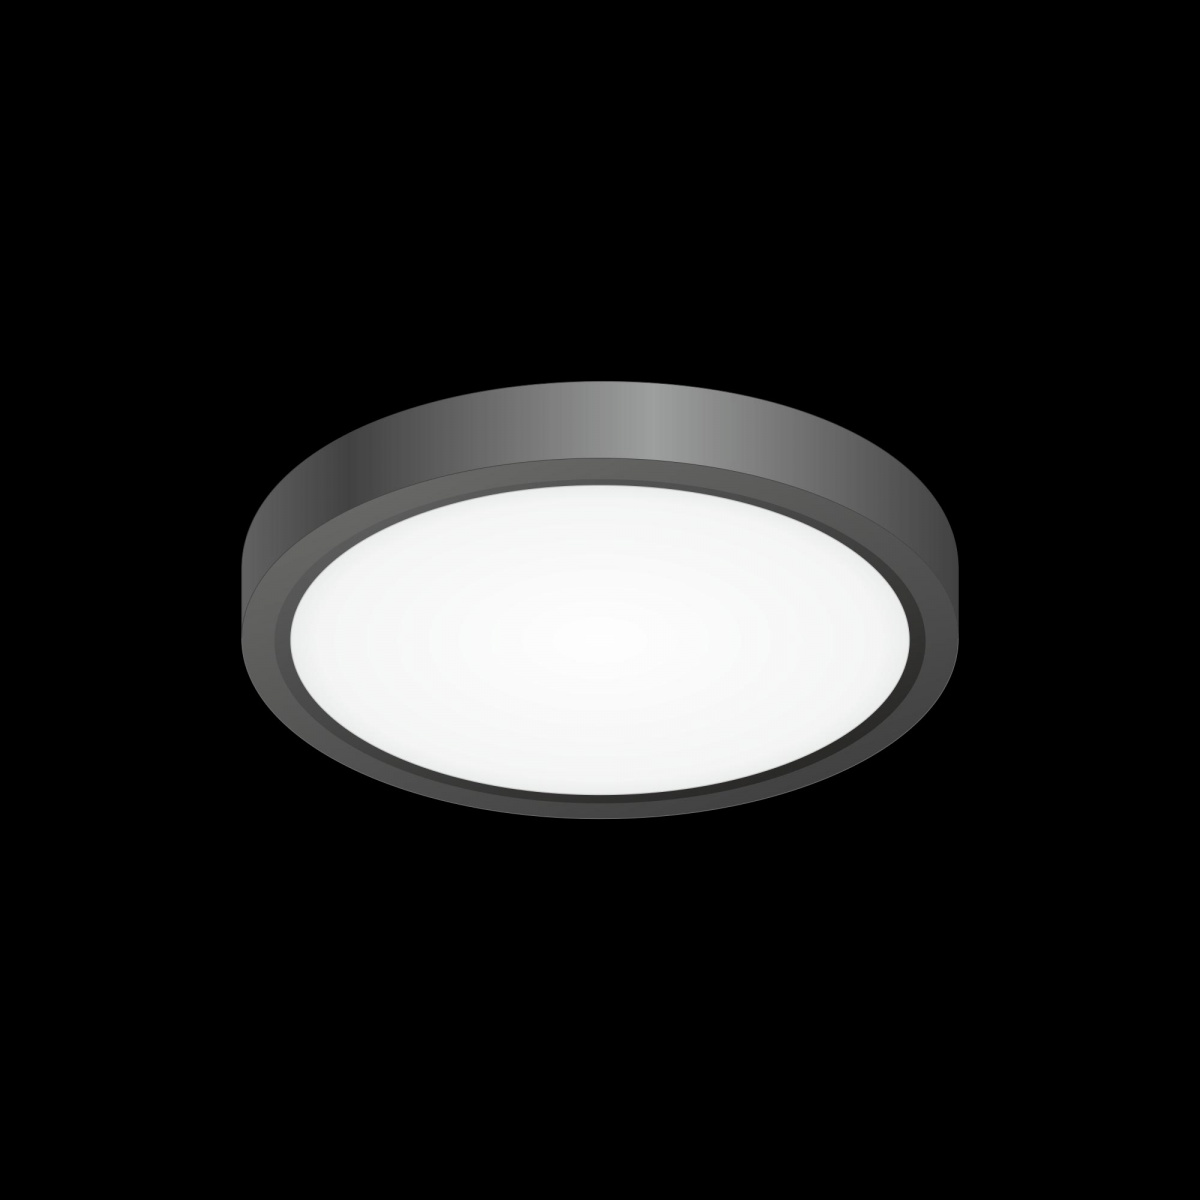 светильник накладной citilux бейсик (beysik), артикул CL738121N